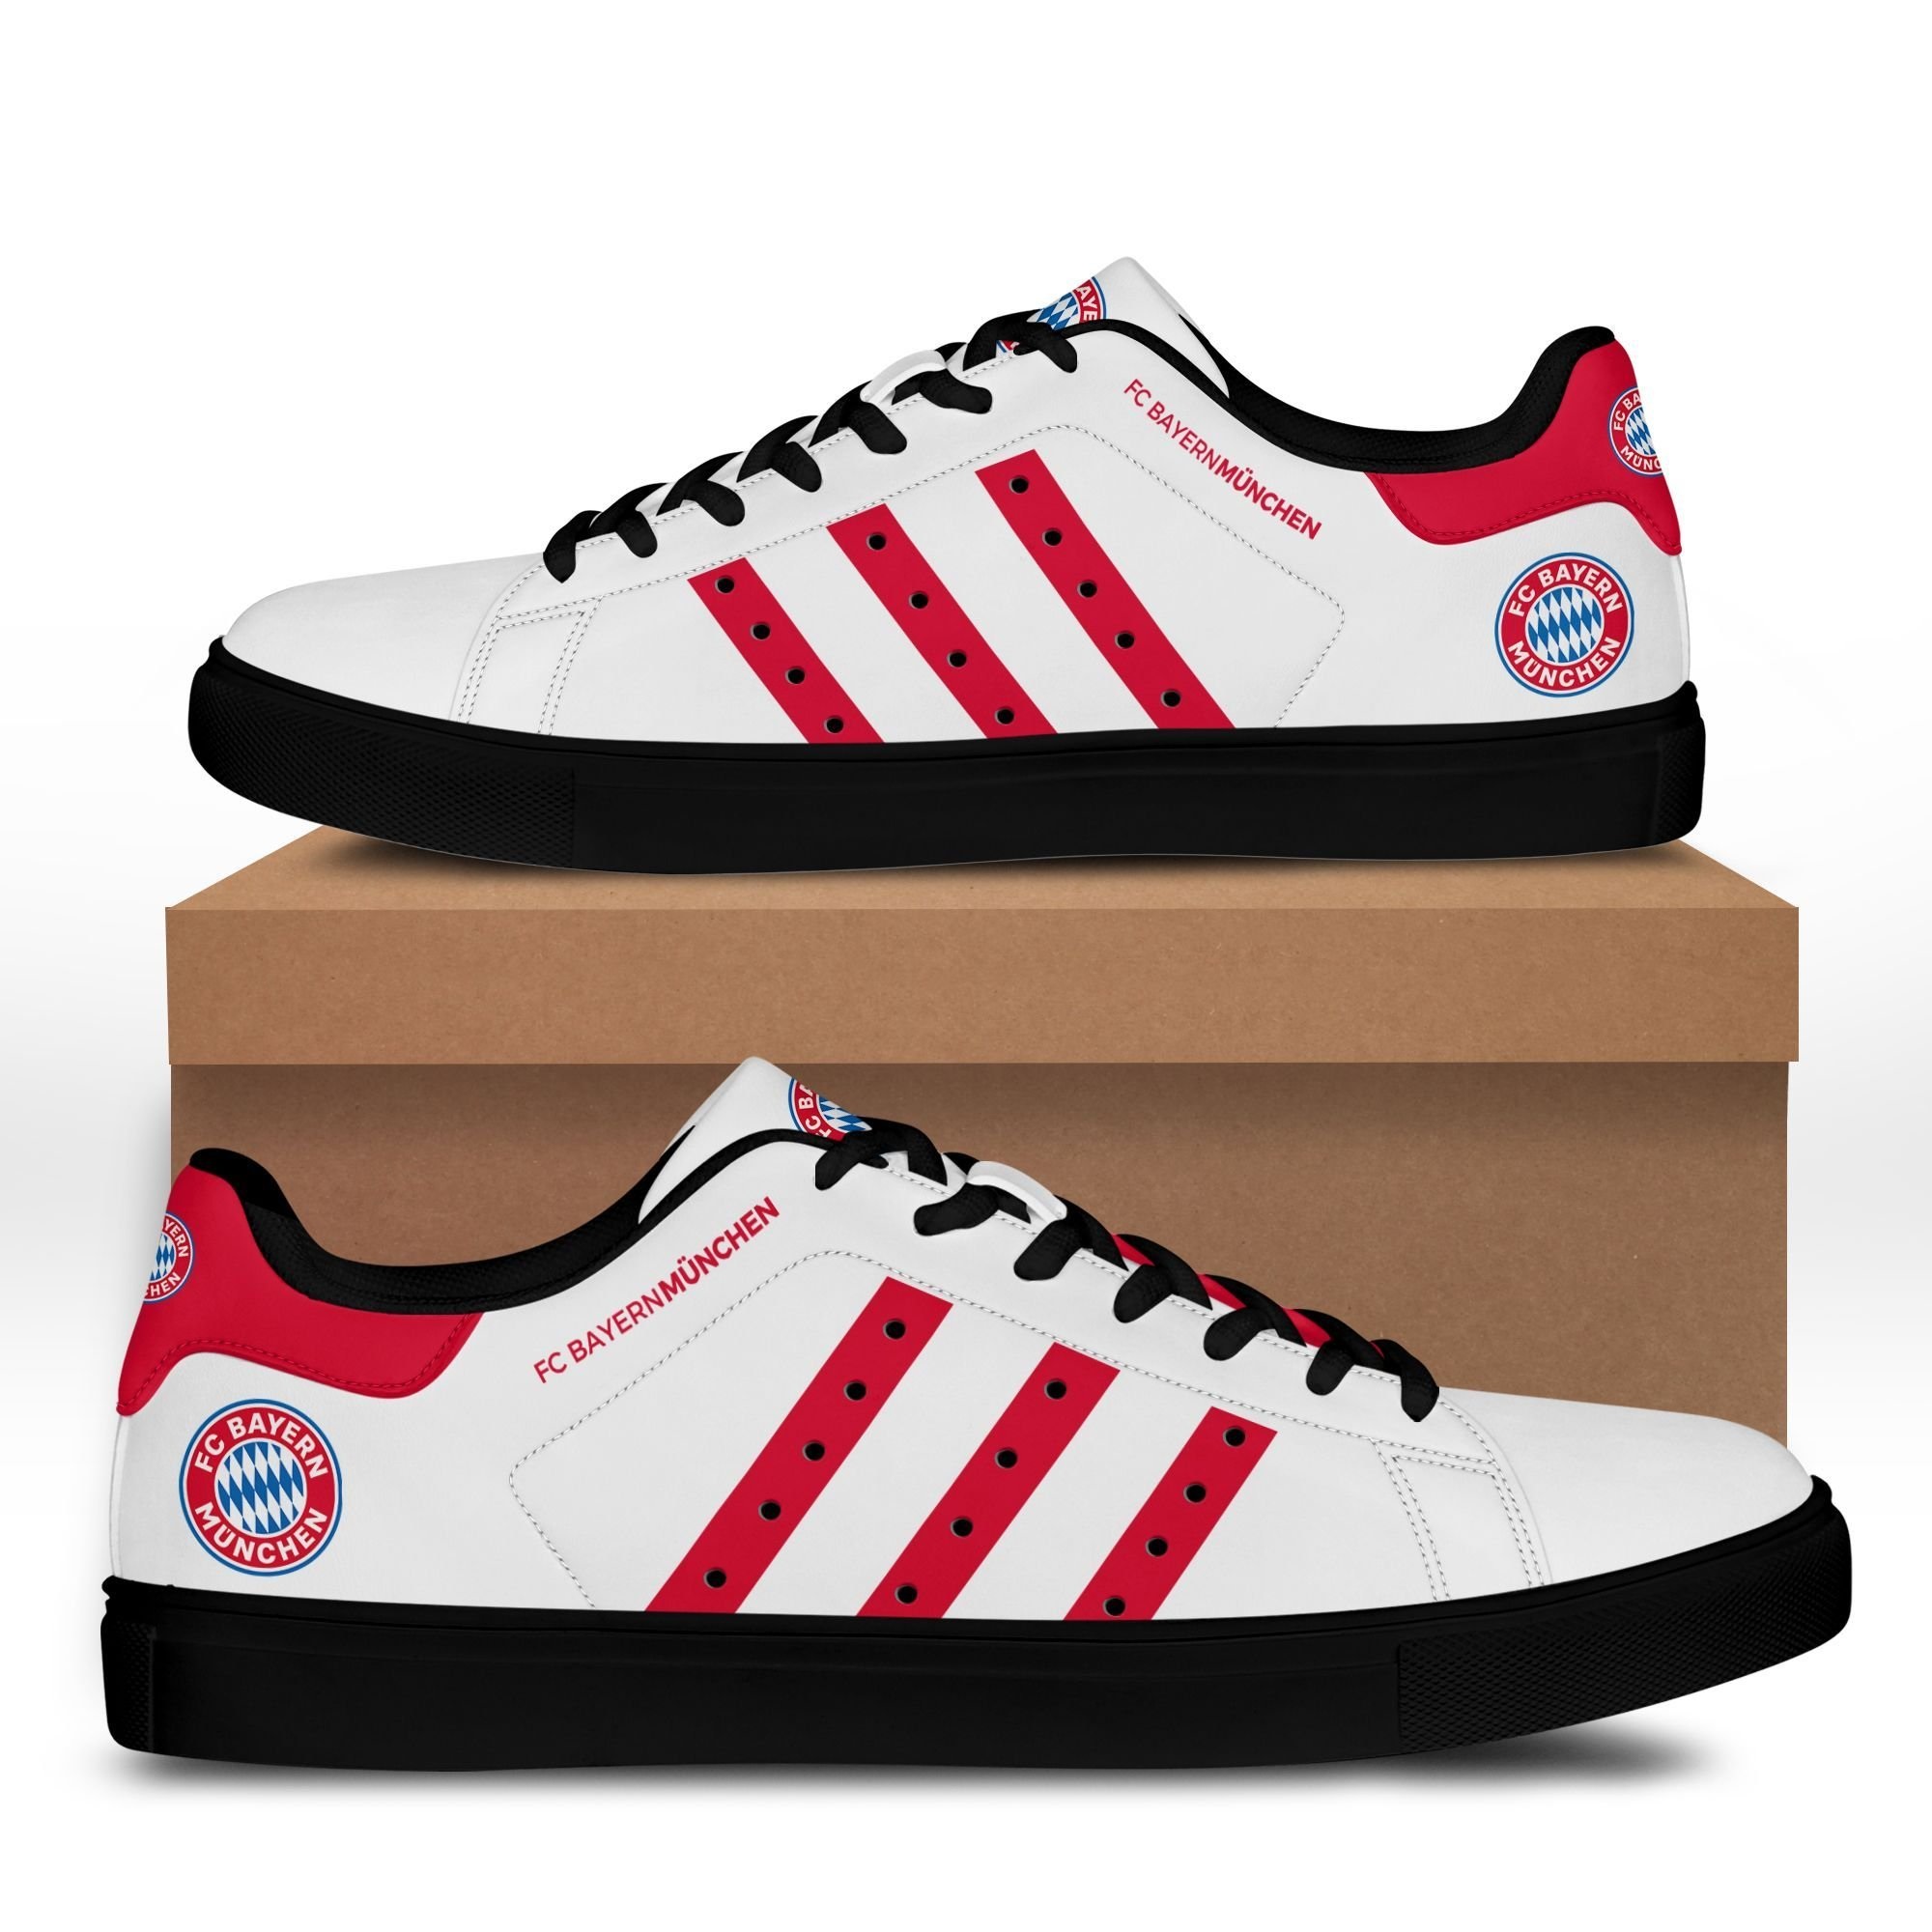 Bayern Munchen stan smith shoes